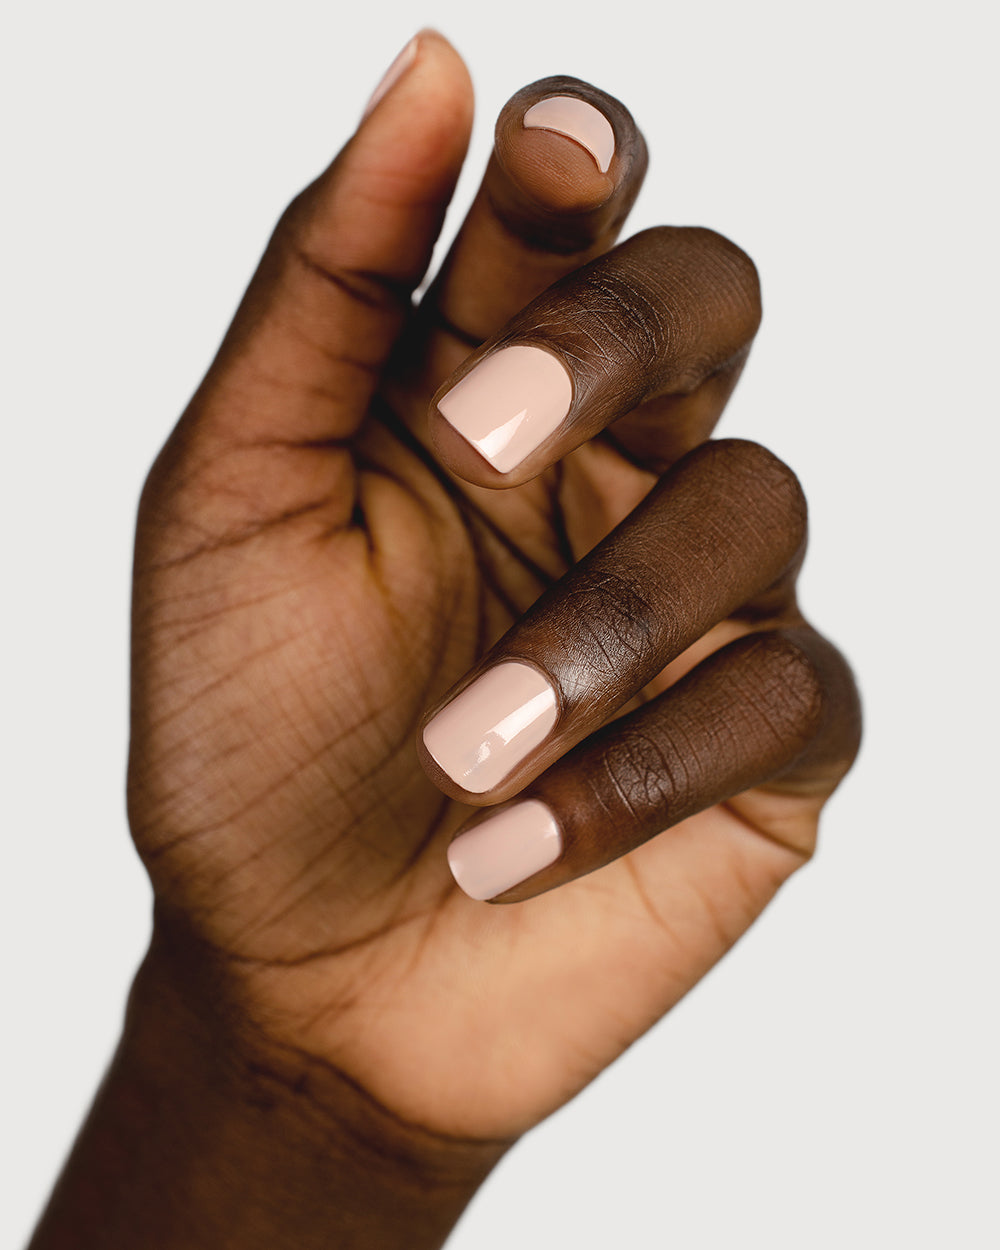 Soft neutral-pink nail polish hand swatch on dark skin tone